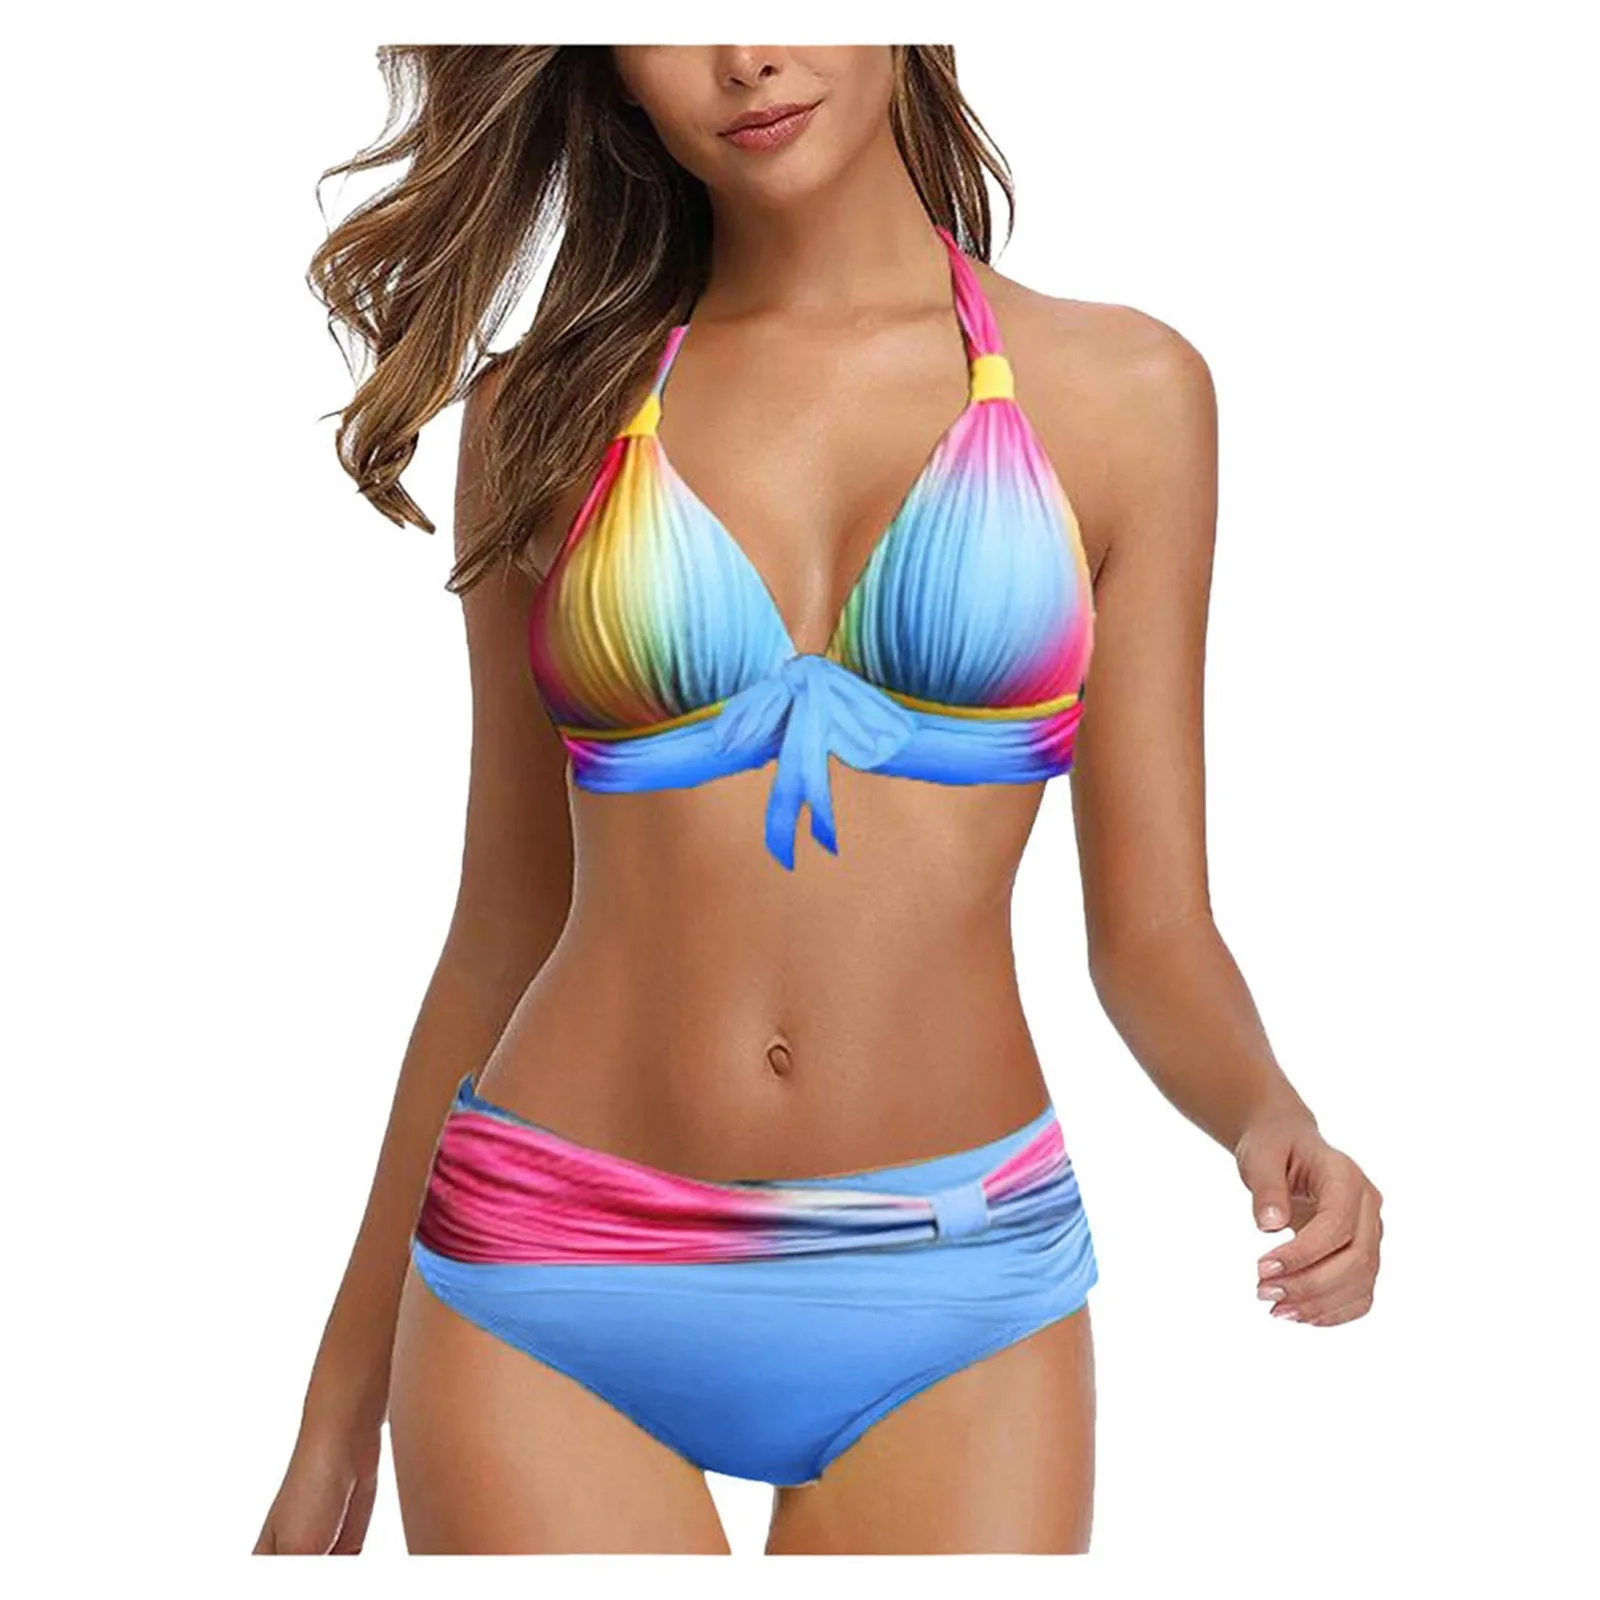 

Bikini 2021 Women Large size Tie Dye Print Tankini Swimjupmsuit Swimsuit Beachwear Padded Swimwear New Beach Bathing Suits 8xl